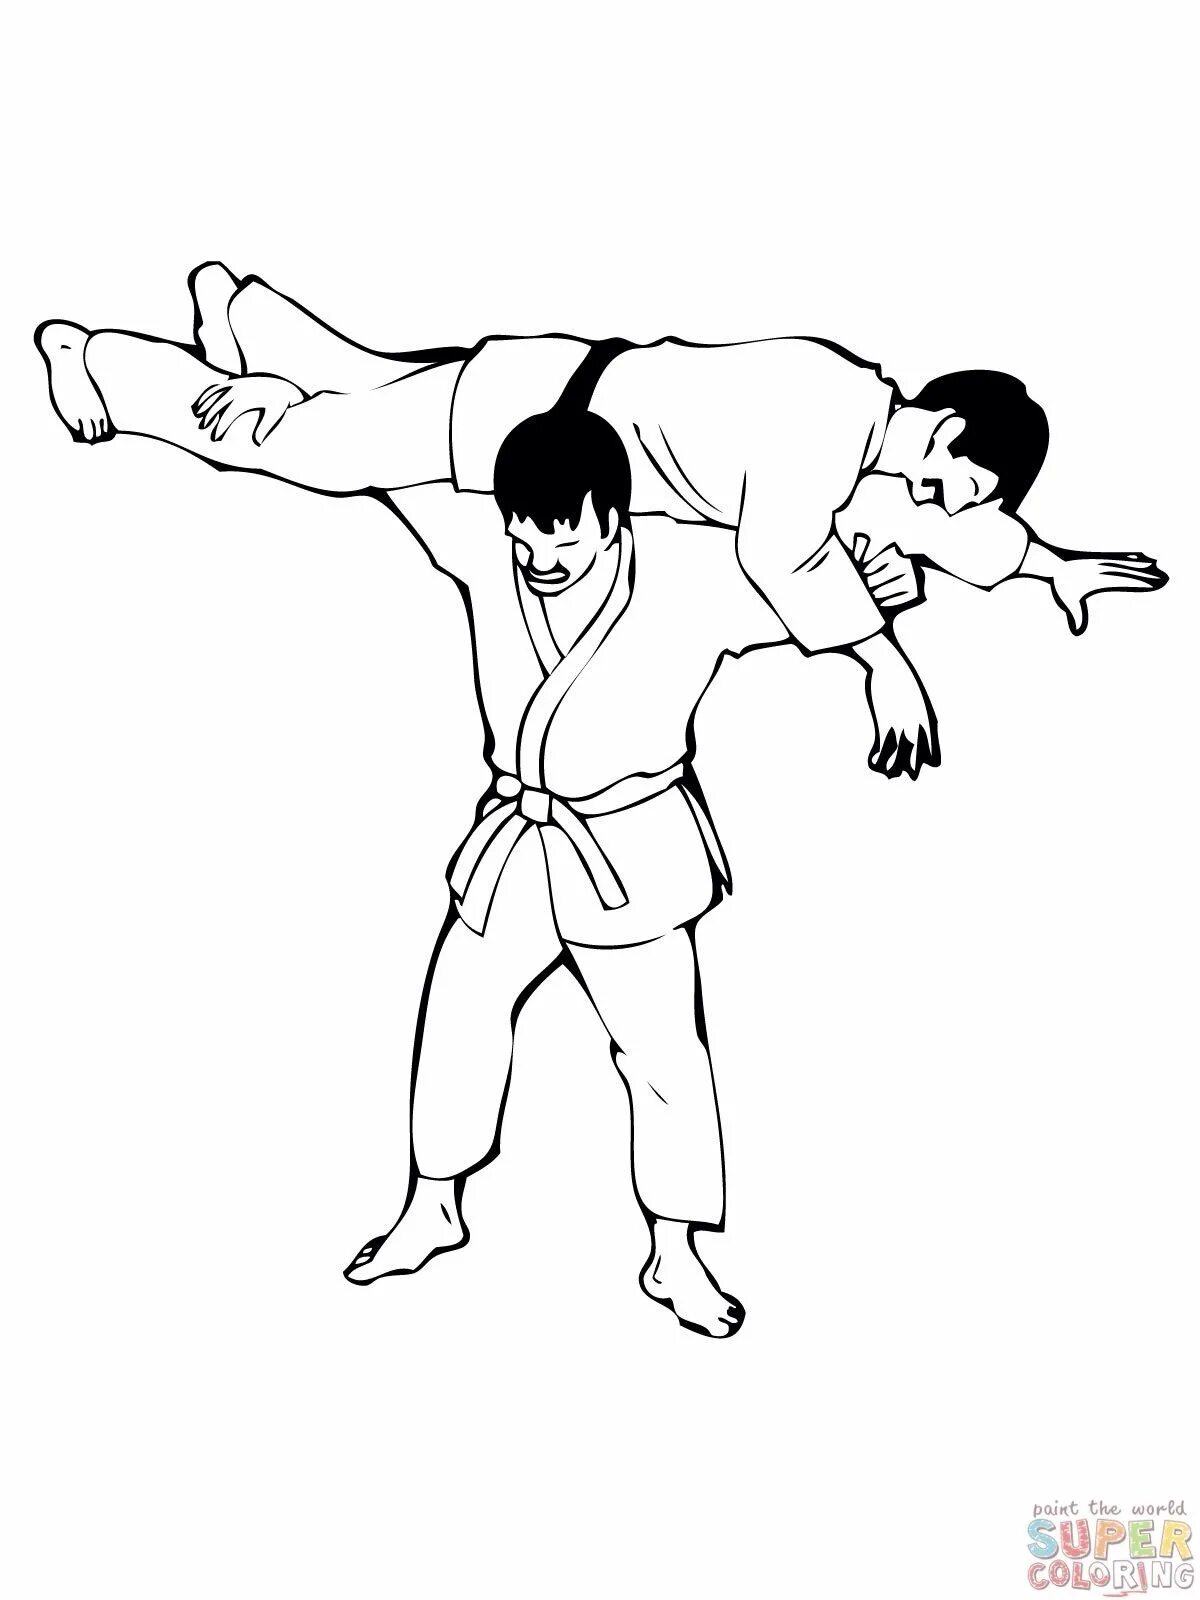 Coloring page charming judoka